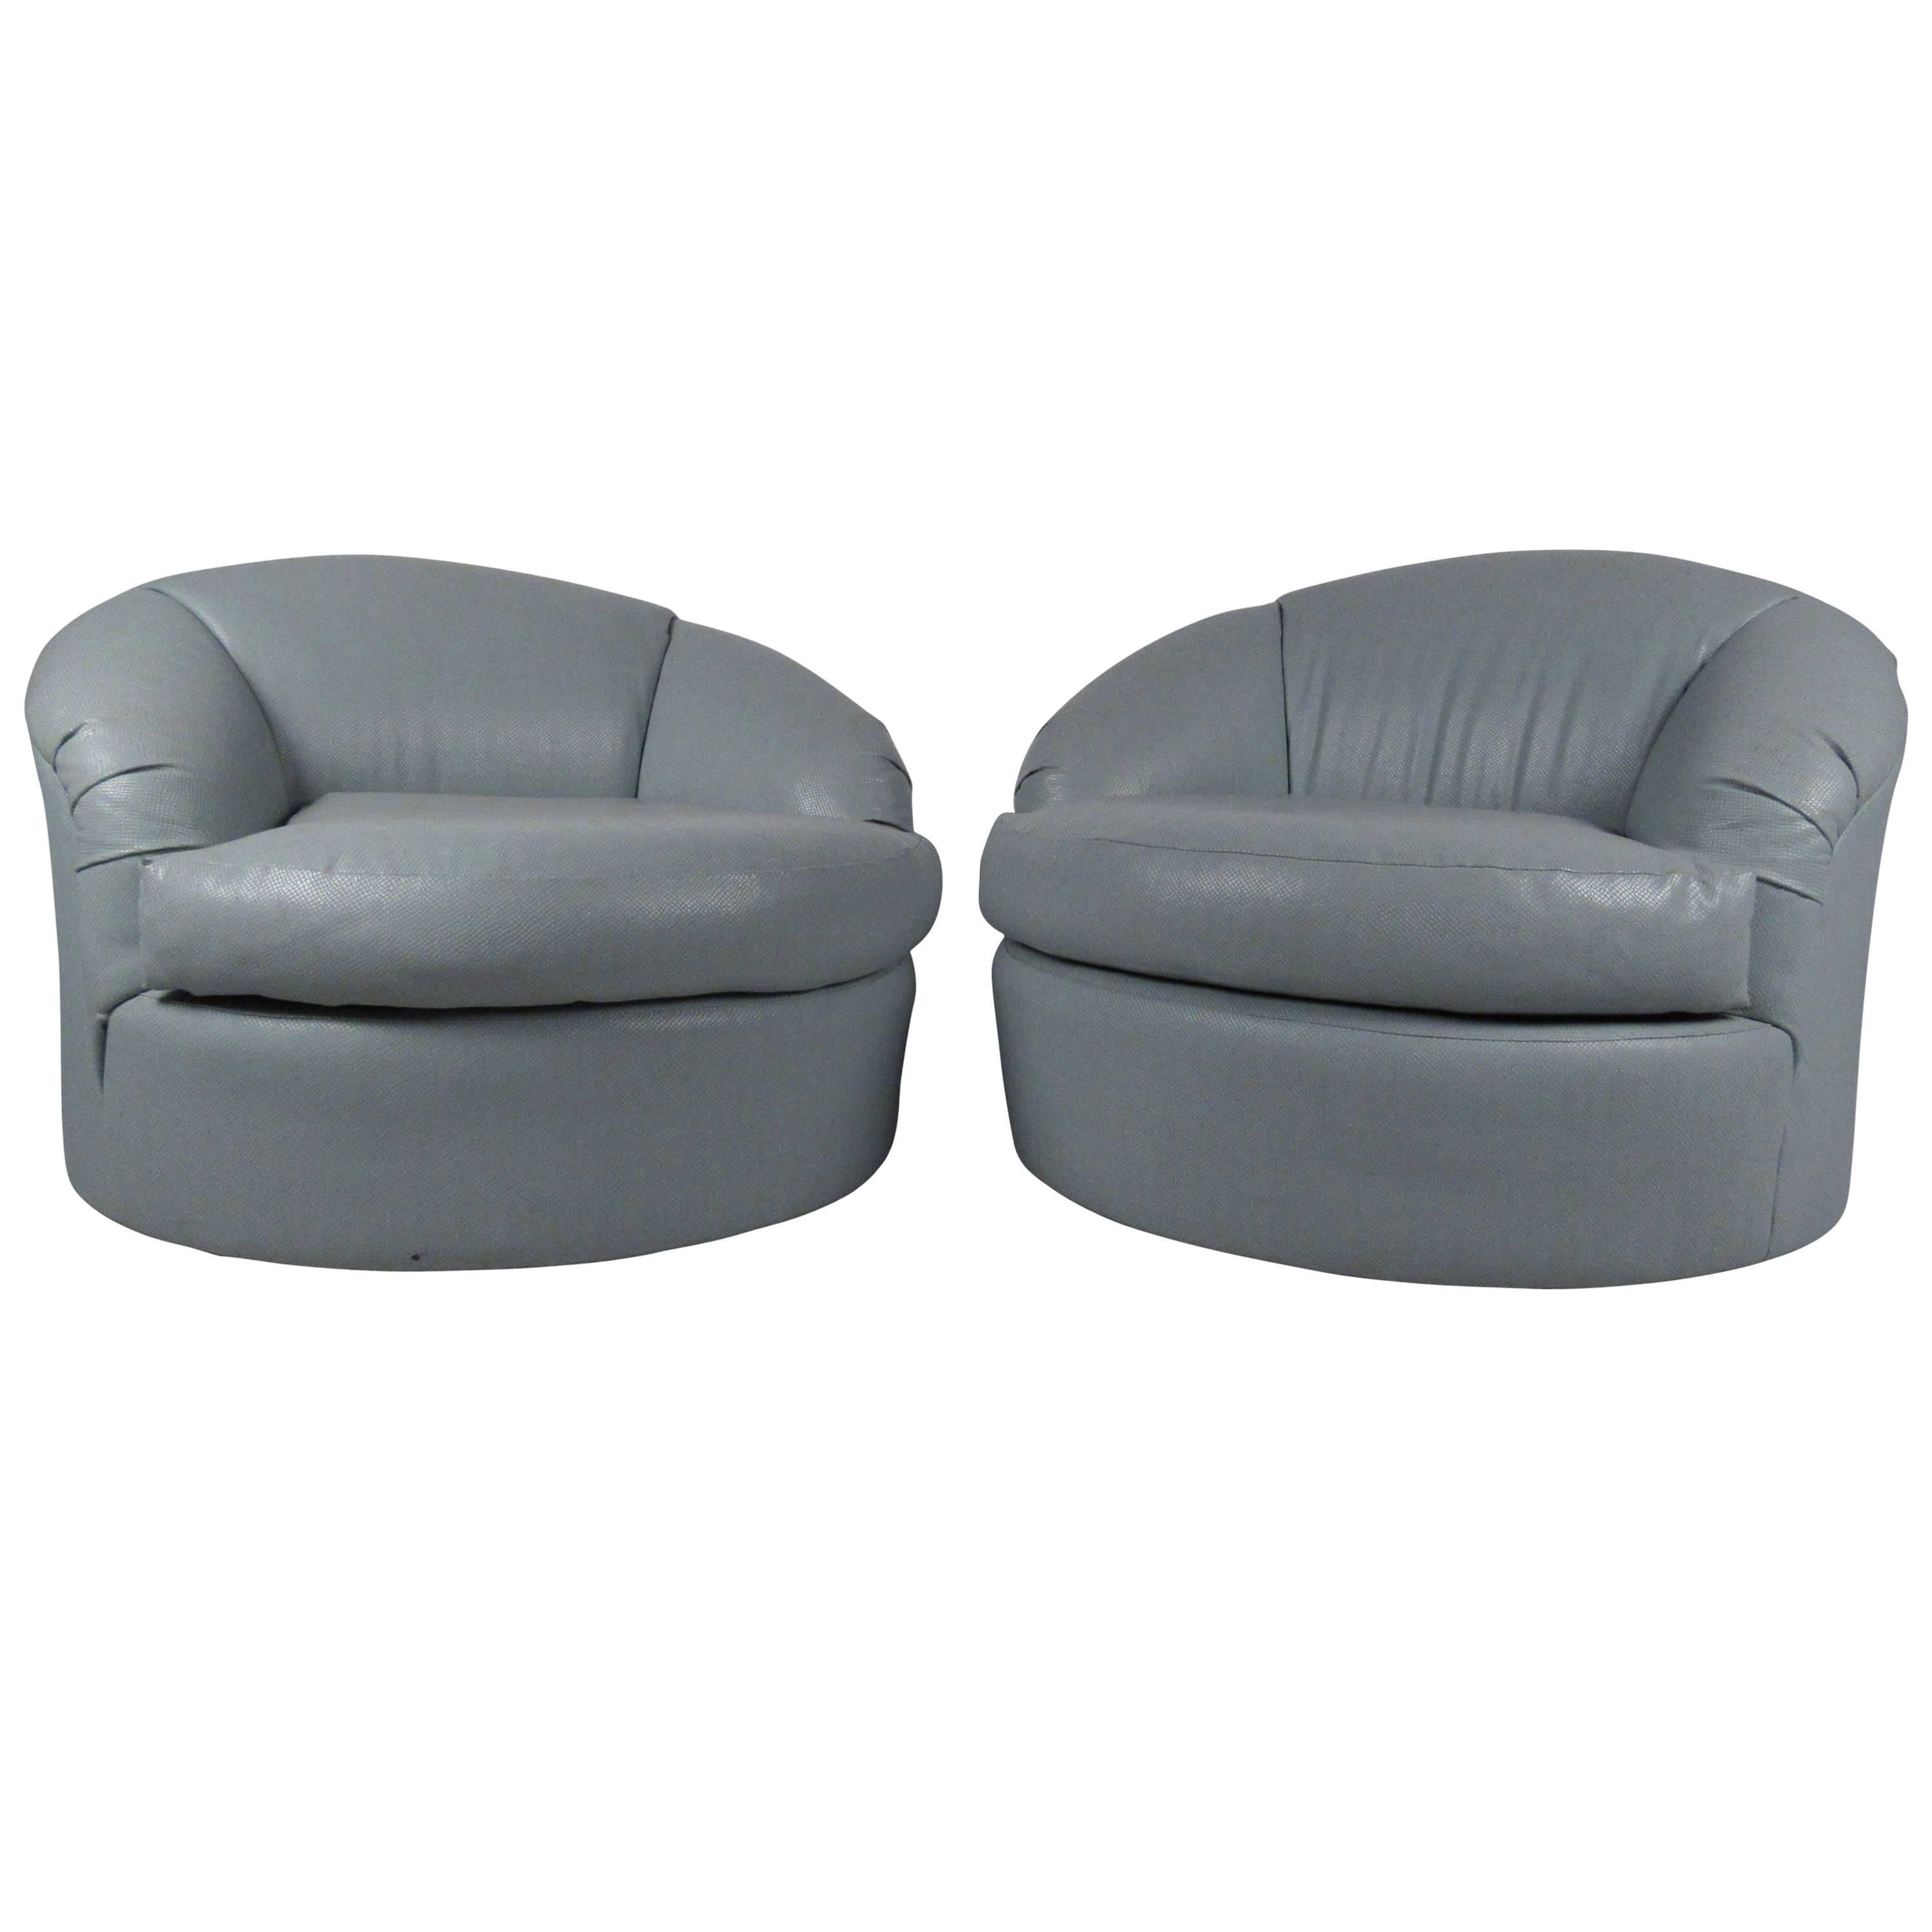 Pair of Modern Swivel Club Chairs